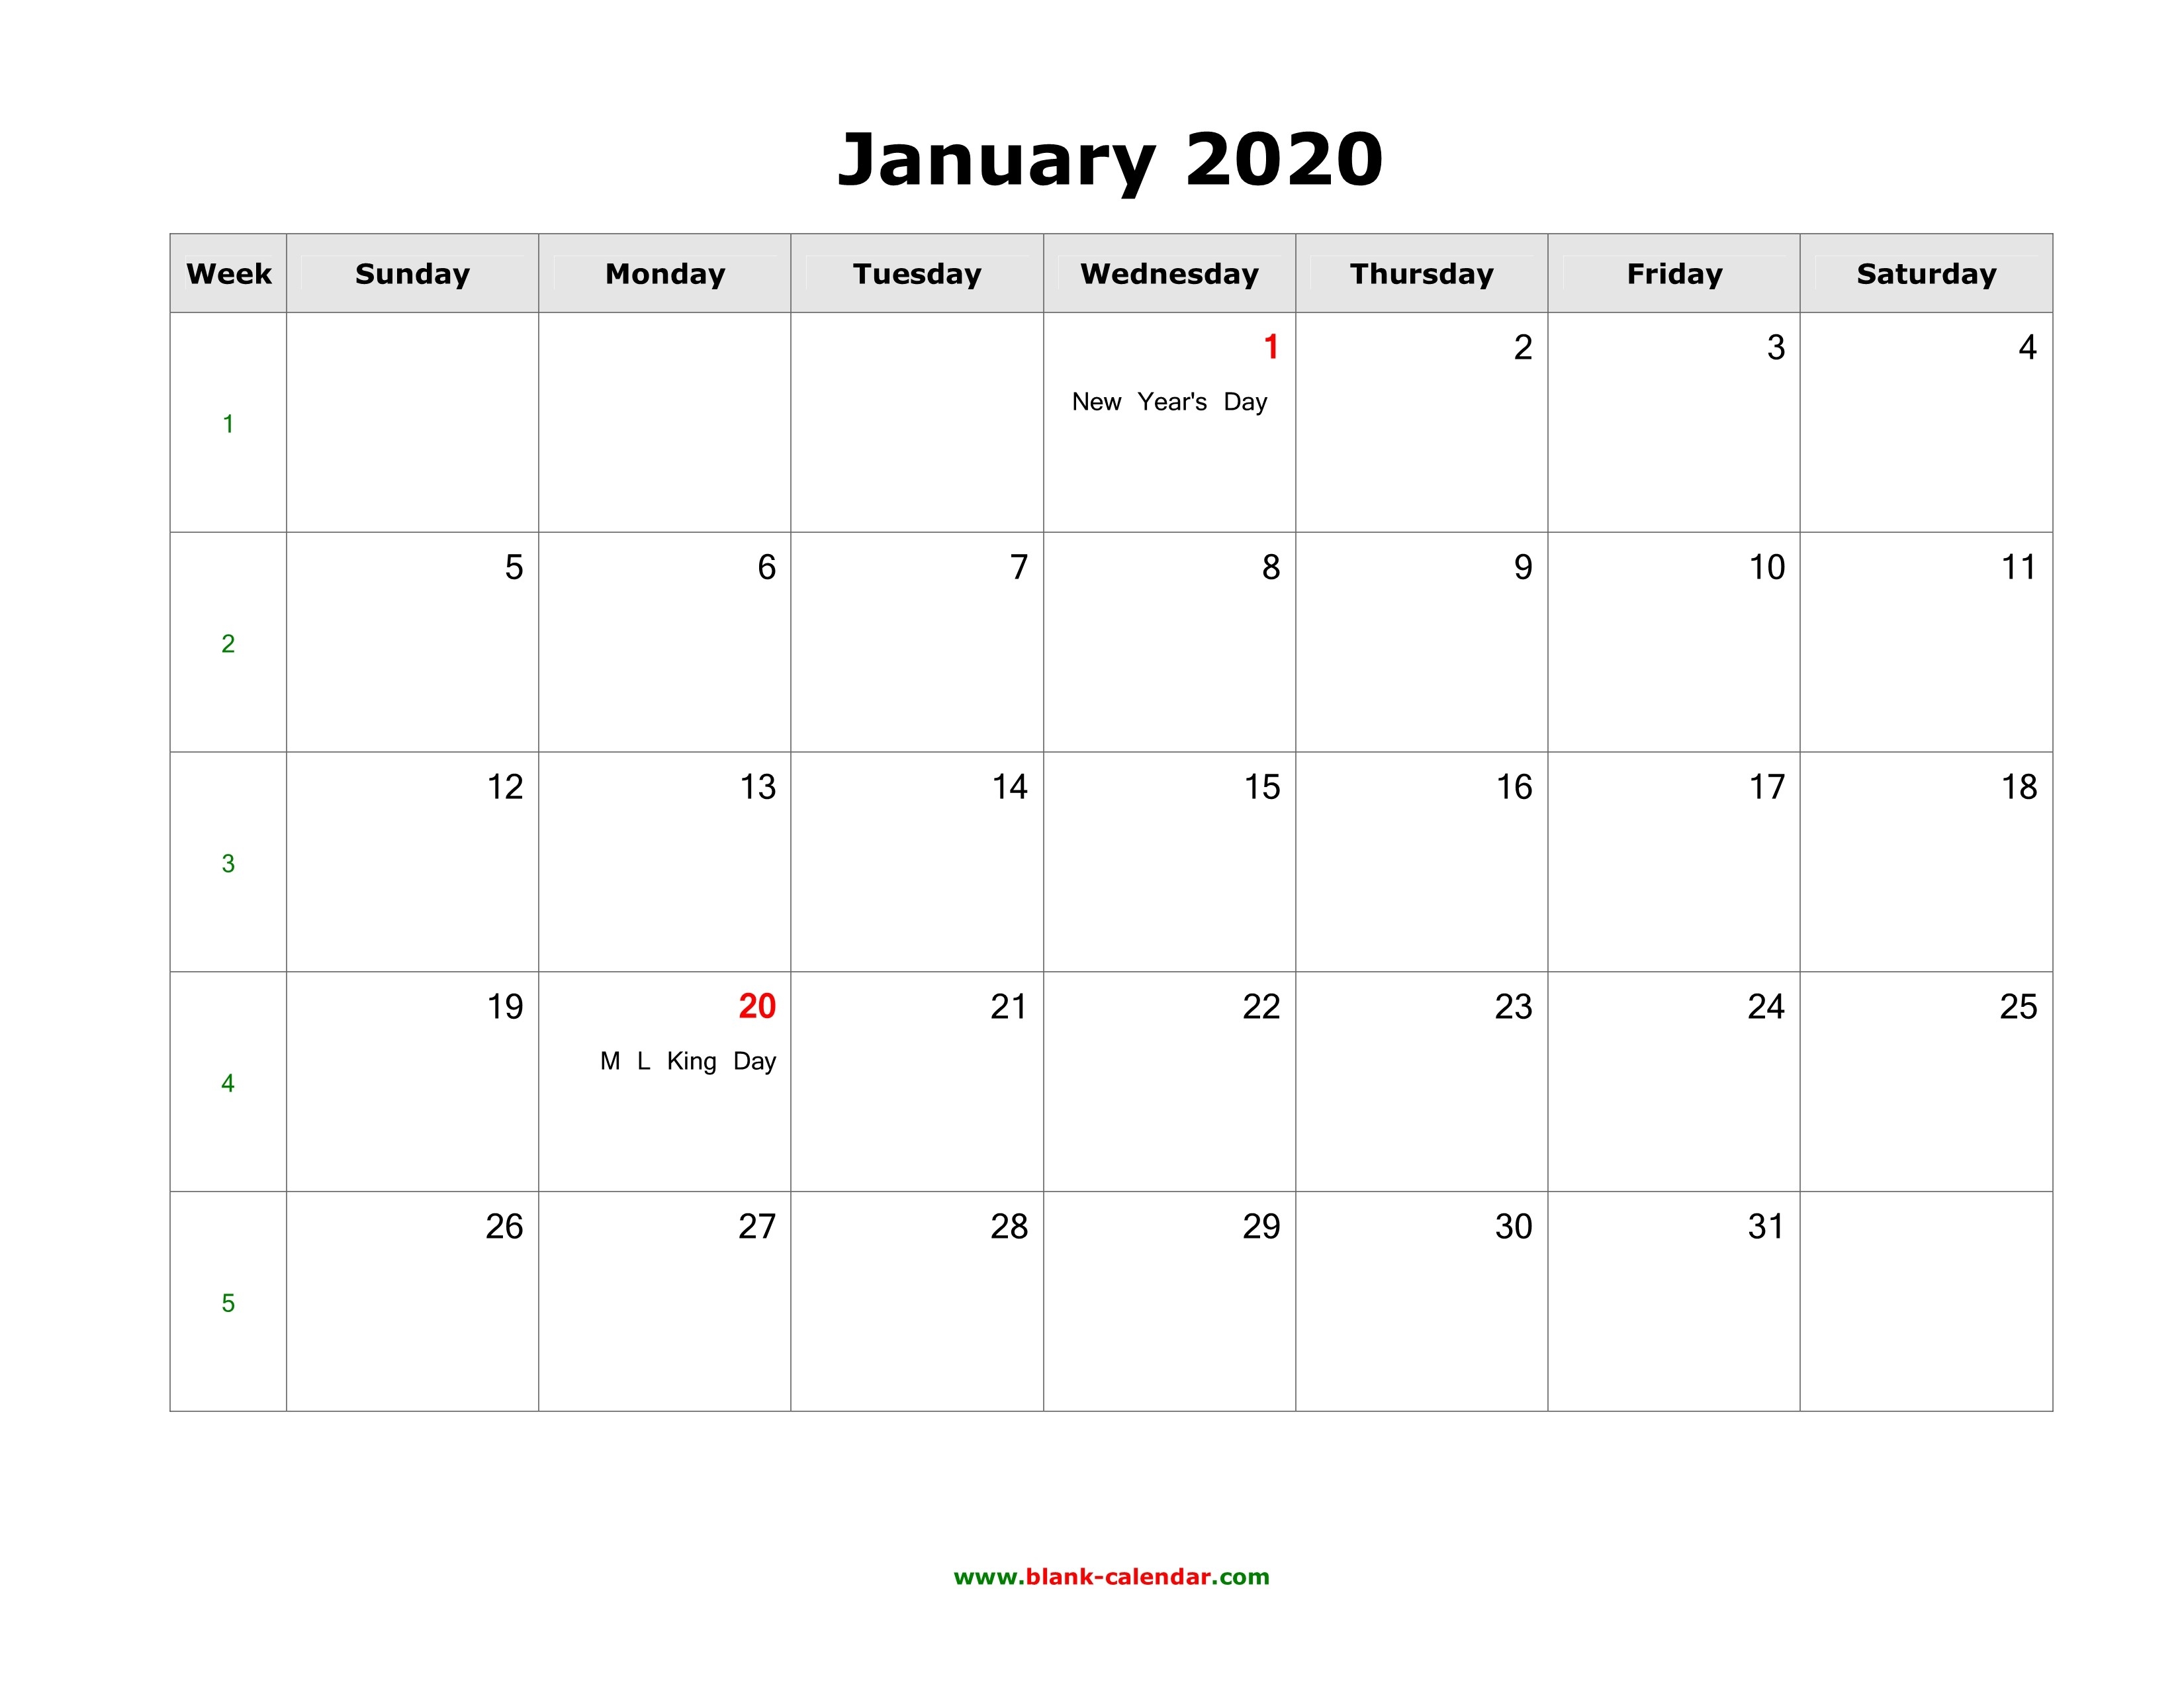 January 2020 Blank Calendar | Free Download Calendar Templates-January 2020 Calendar With Holidays Printable